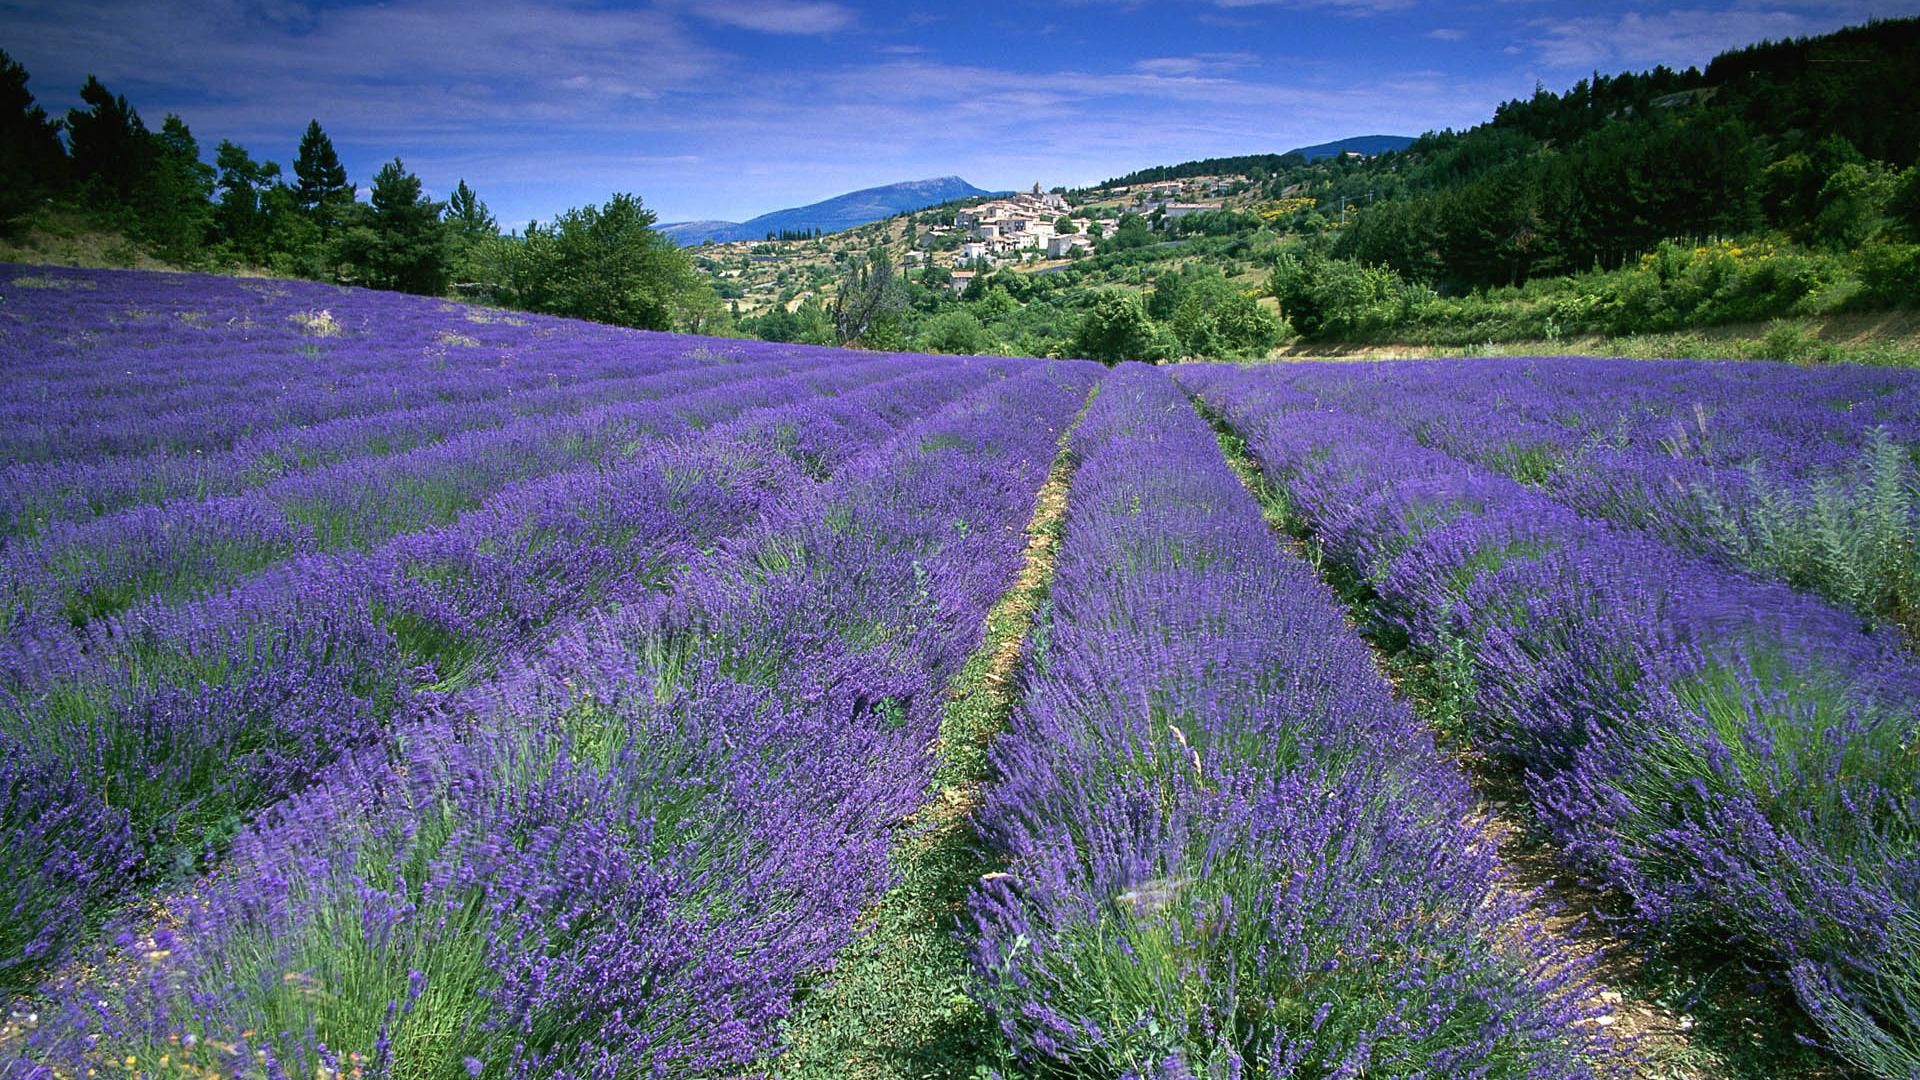 Lavender Field Wallpaper